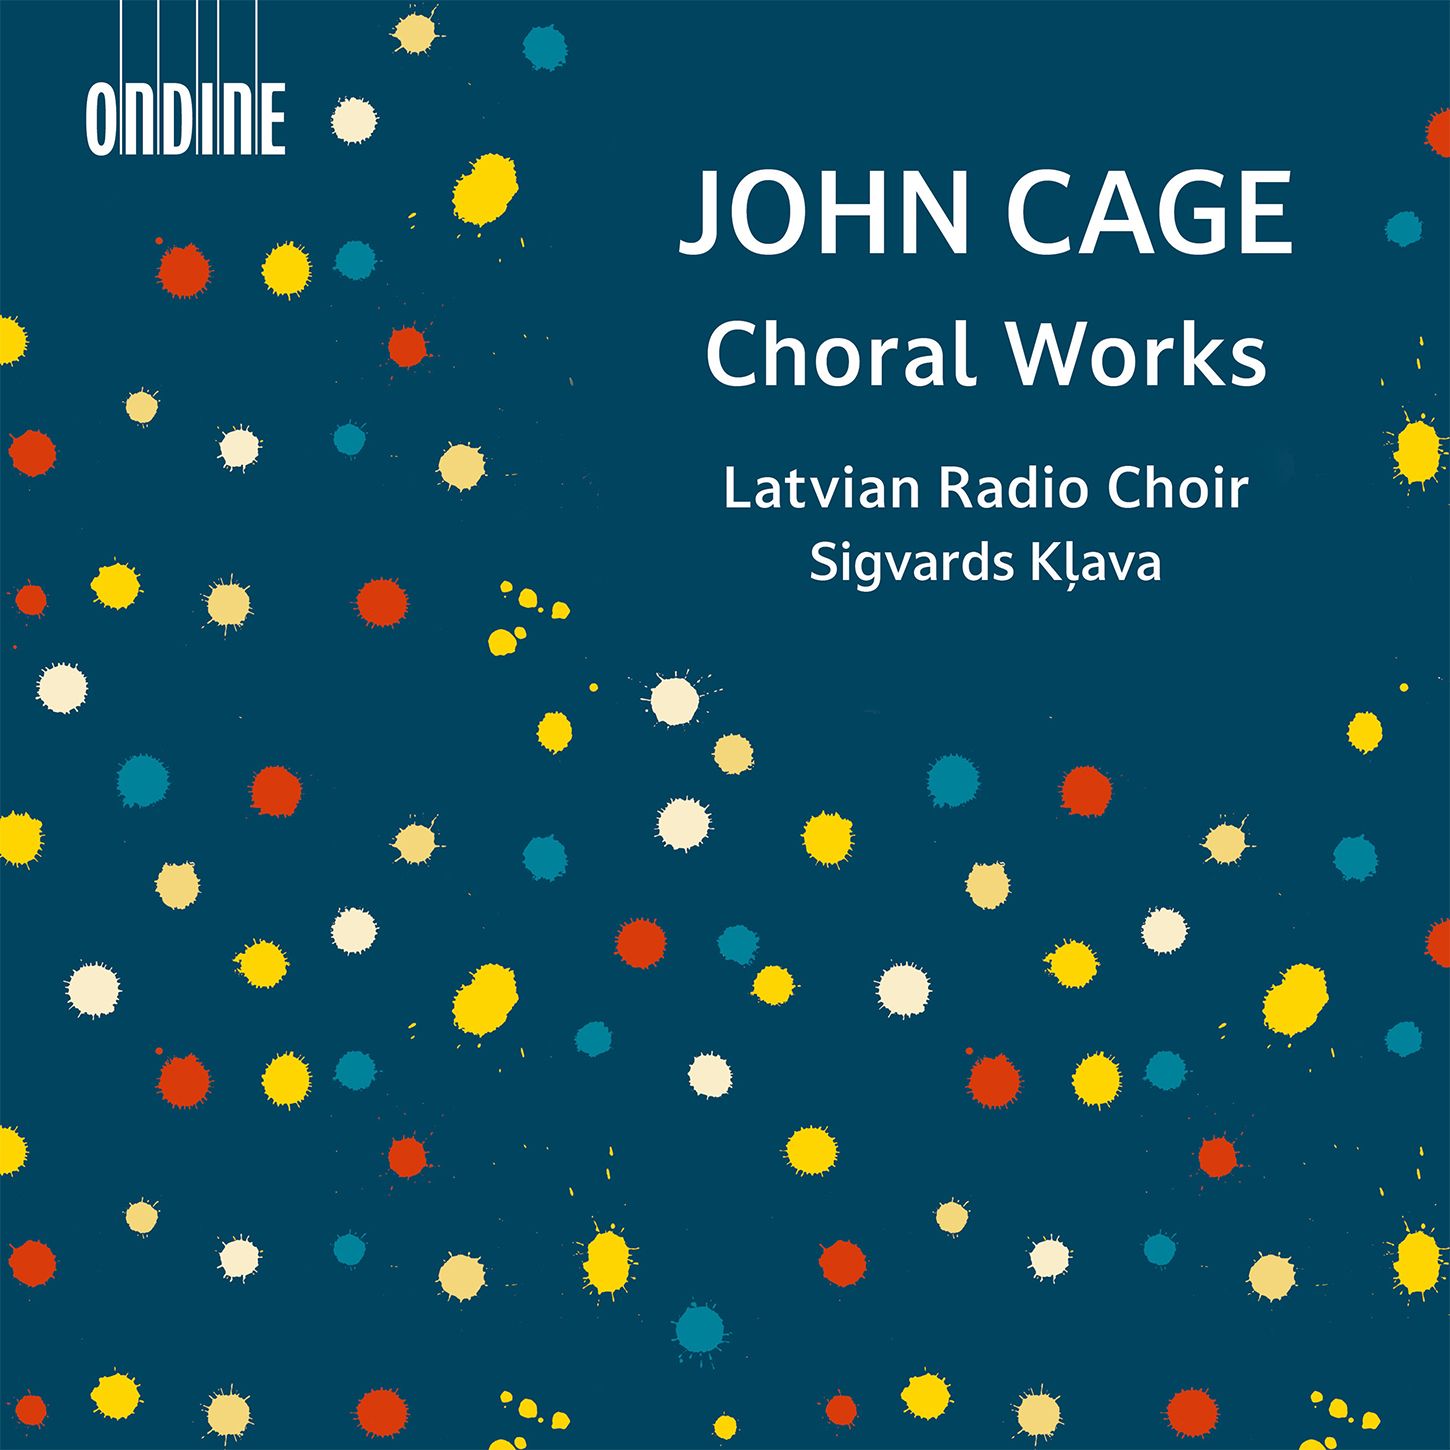 John Cage: Choral Works via Latvia